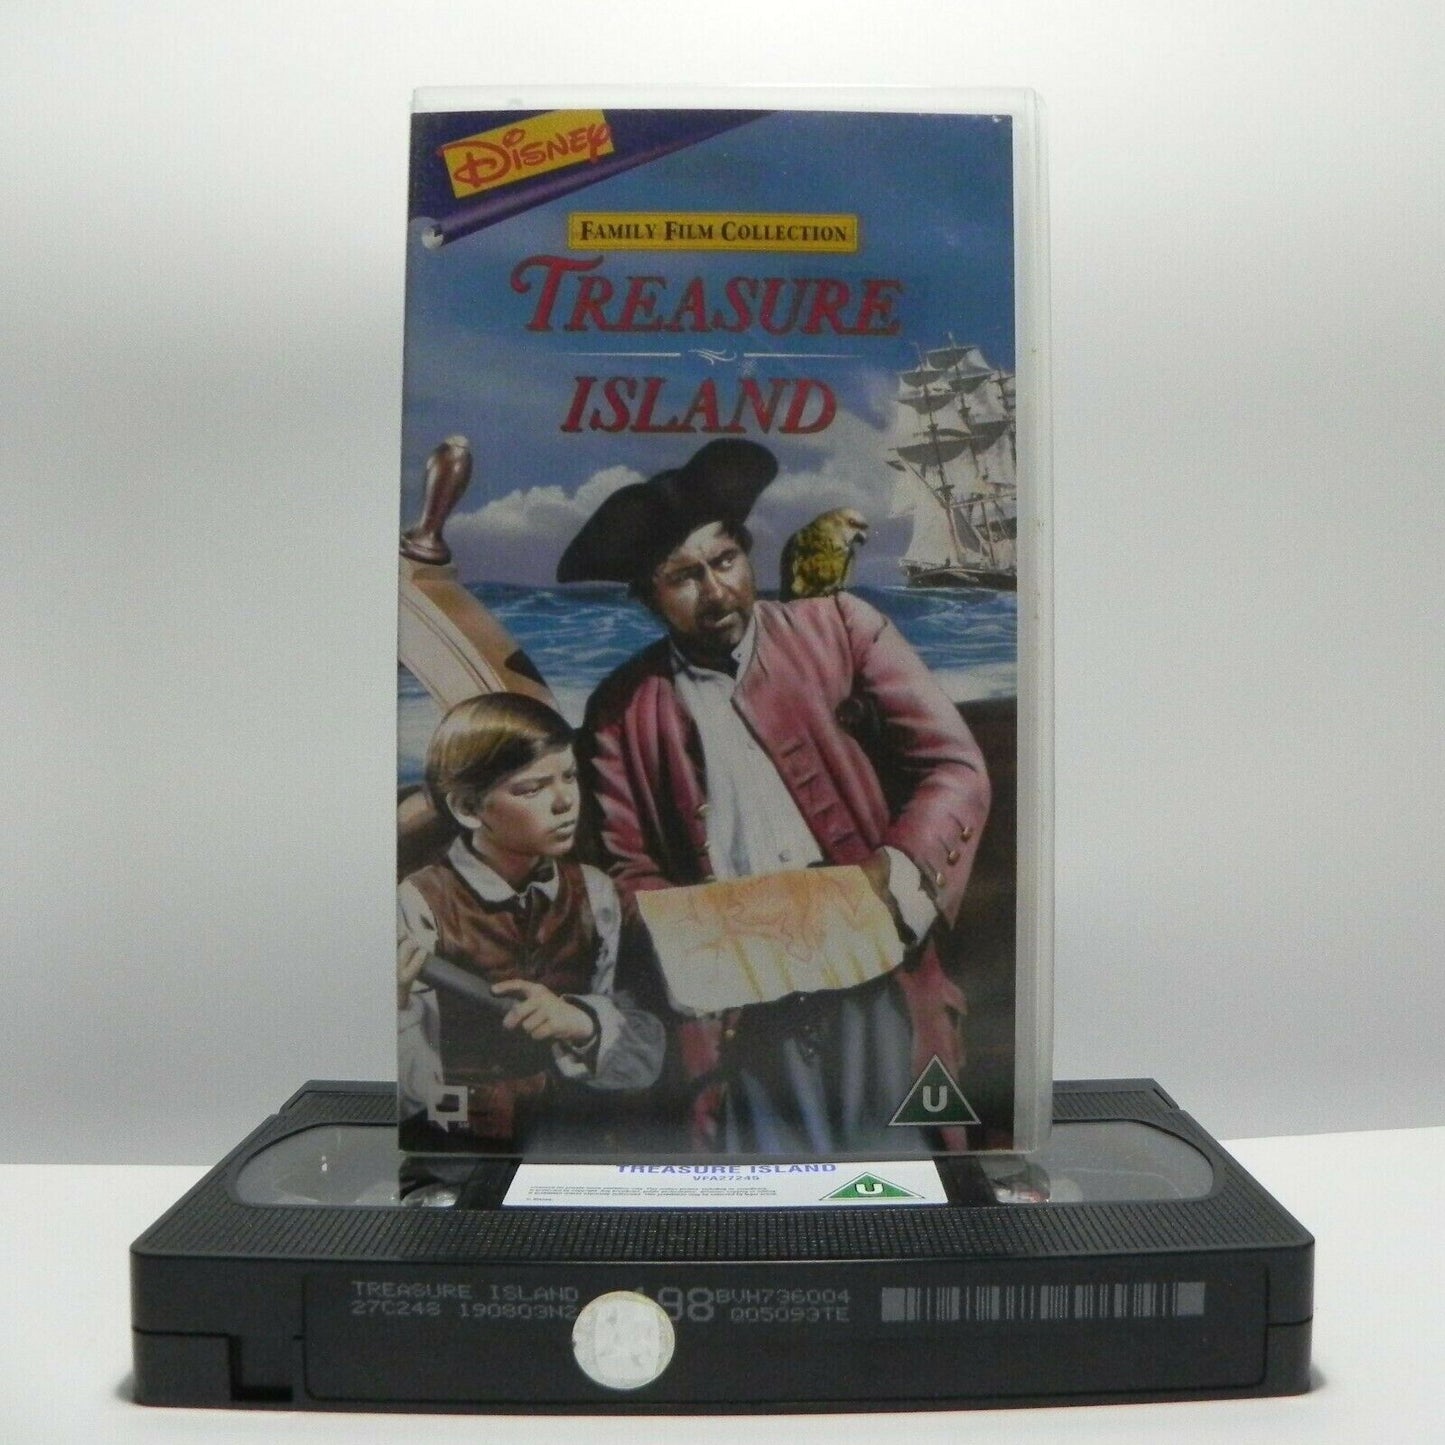 Treasure Island - Uncut Version - Classic Story - Robert Louis Stevenson - VHS-